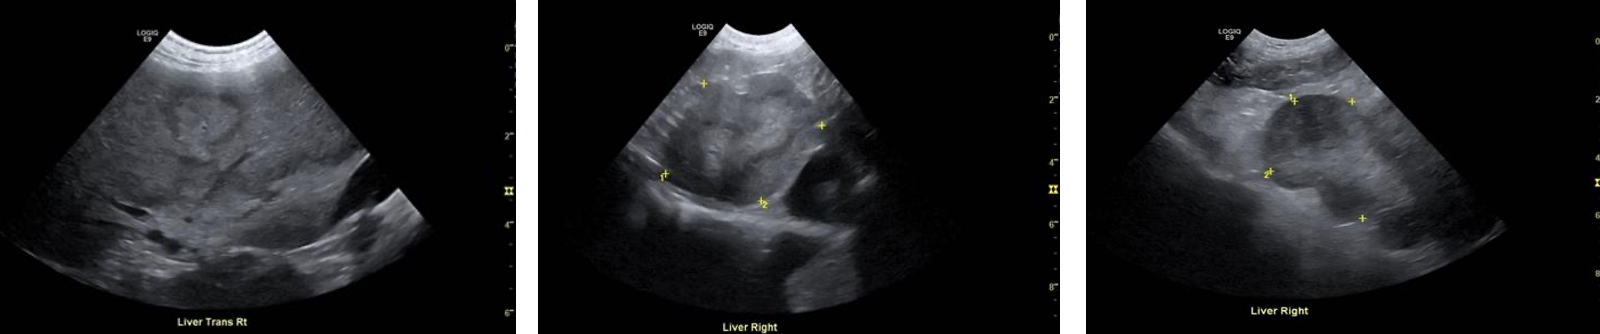 Figure 1: Three ultrasonographic views of the liver